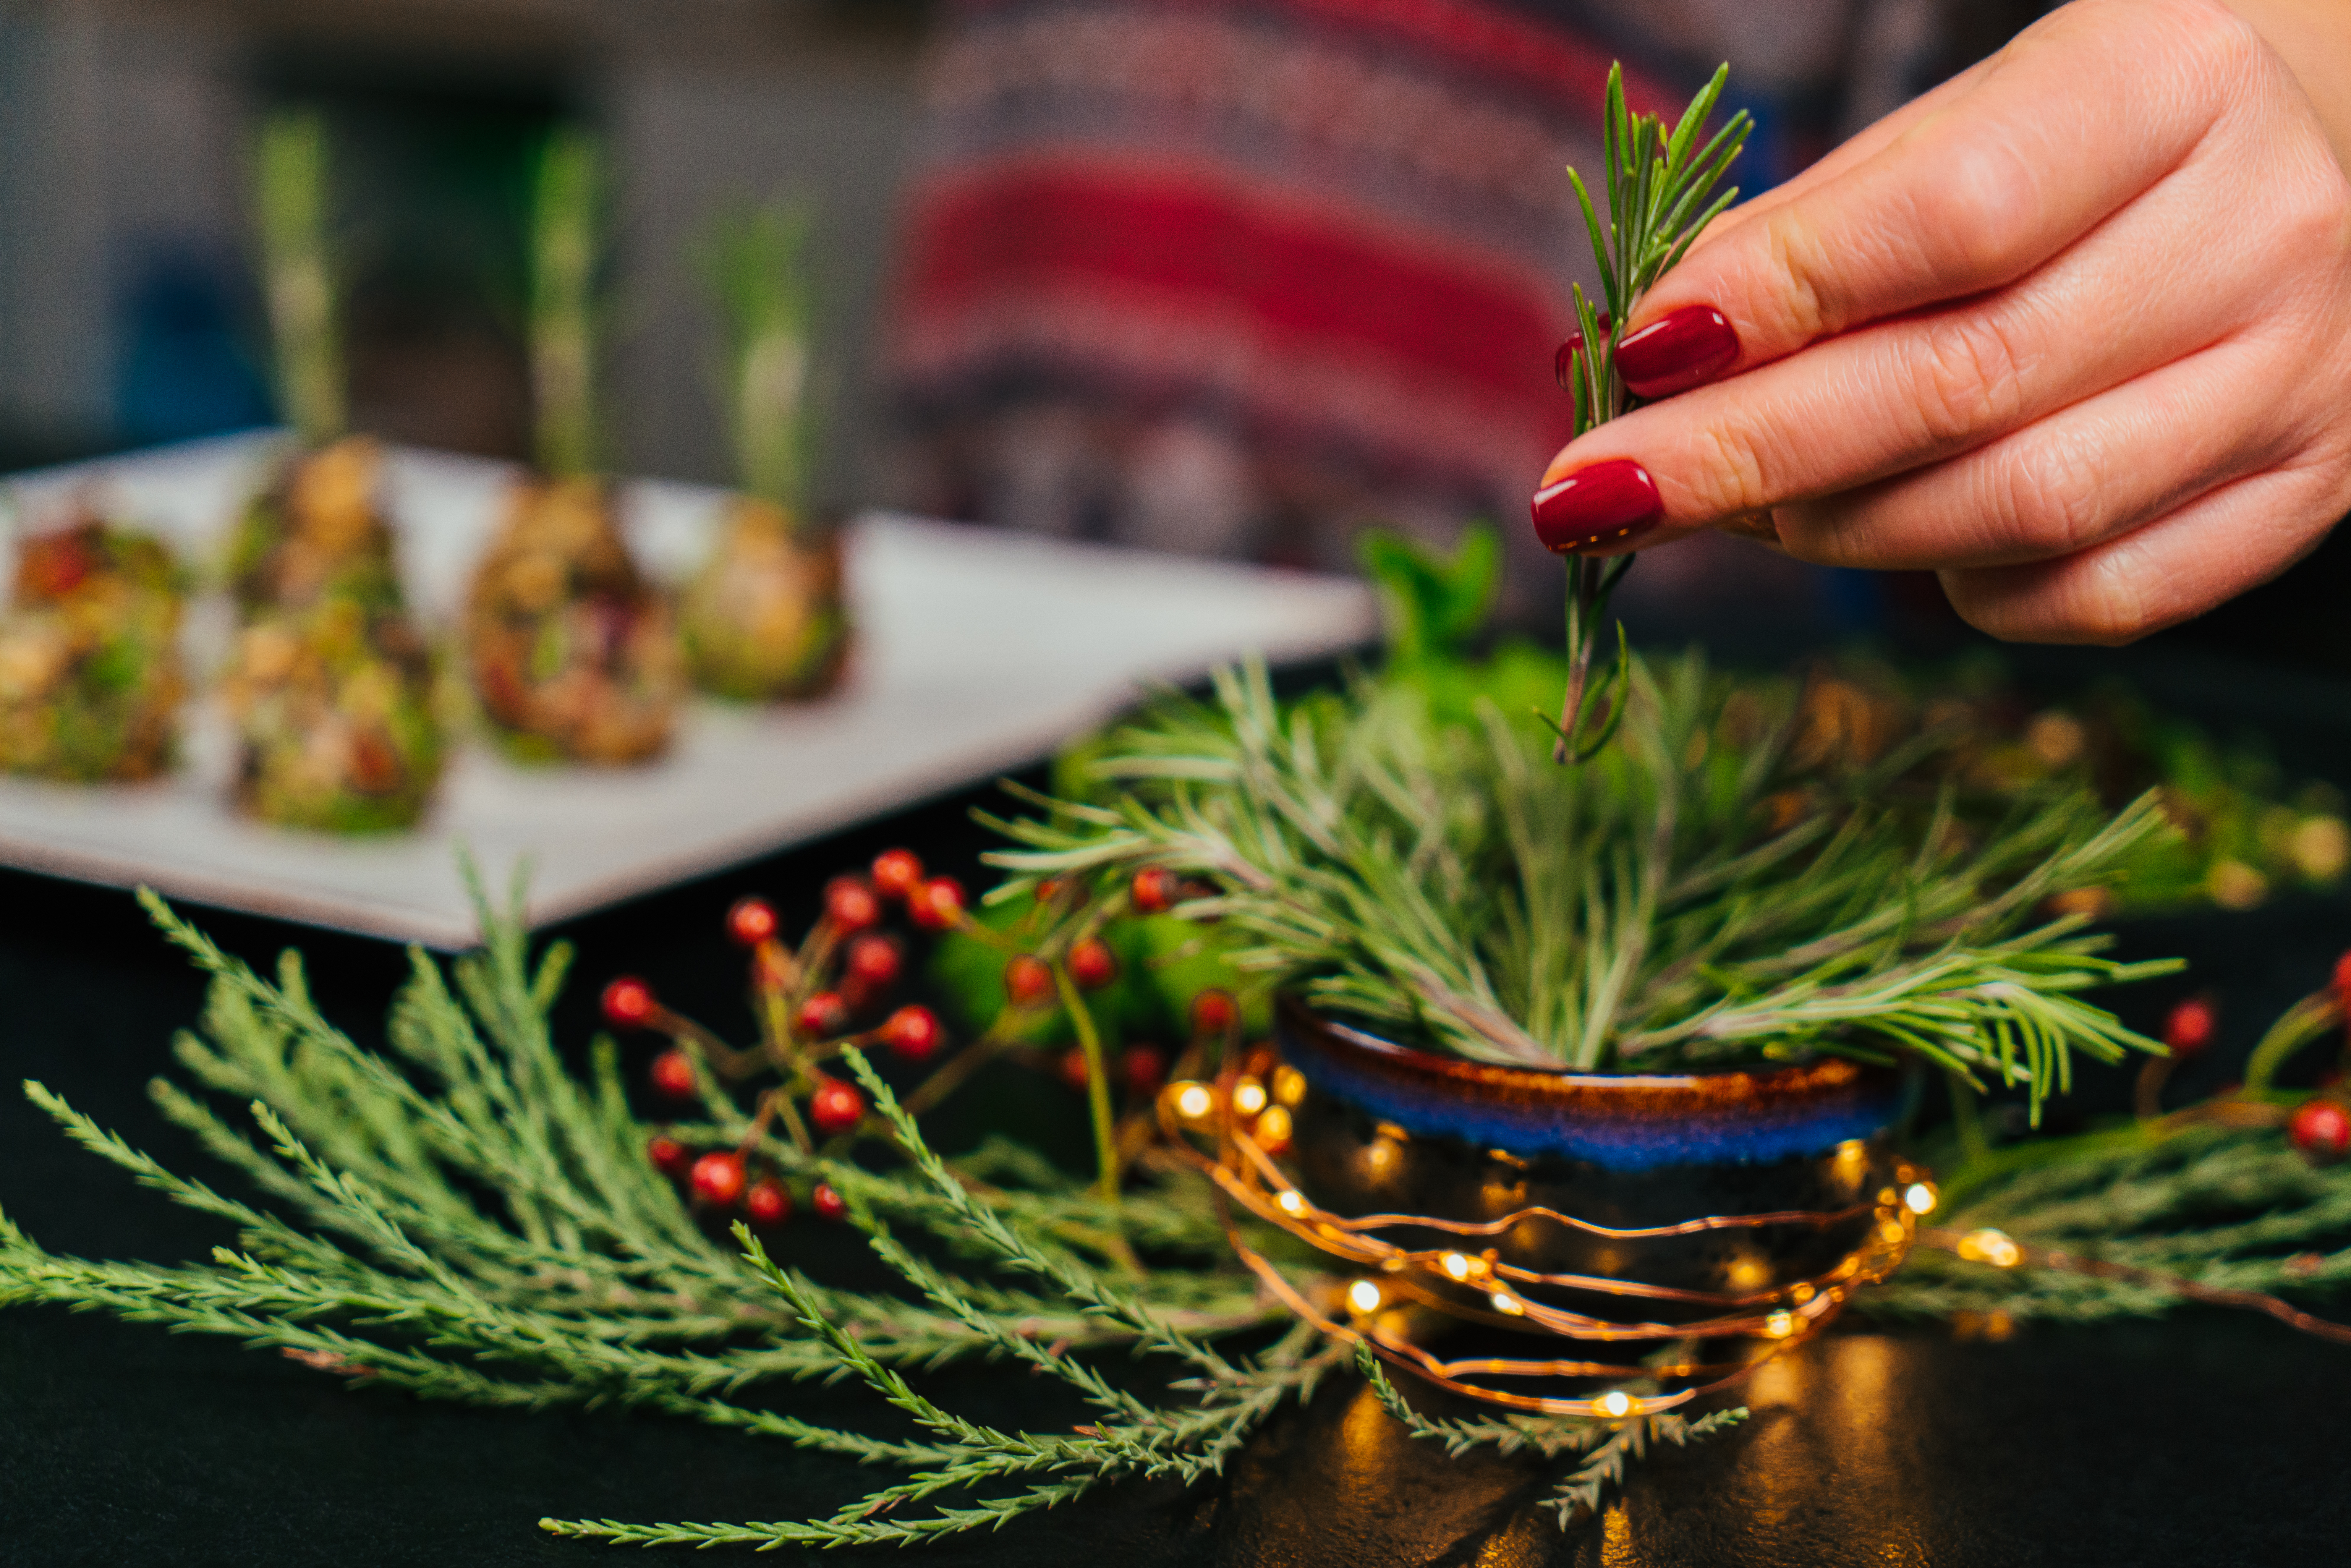 ramitas de romero fresco para decorar tus bocados navideños, canapés navideños fáciles y rápidos paso a paso en fotos